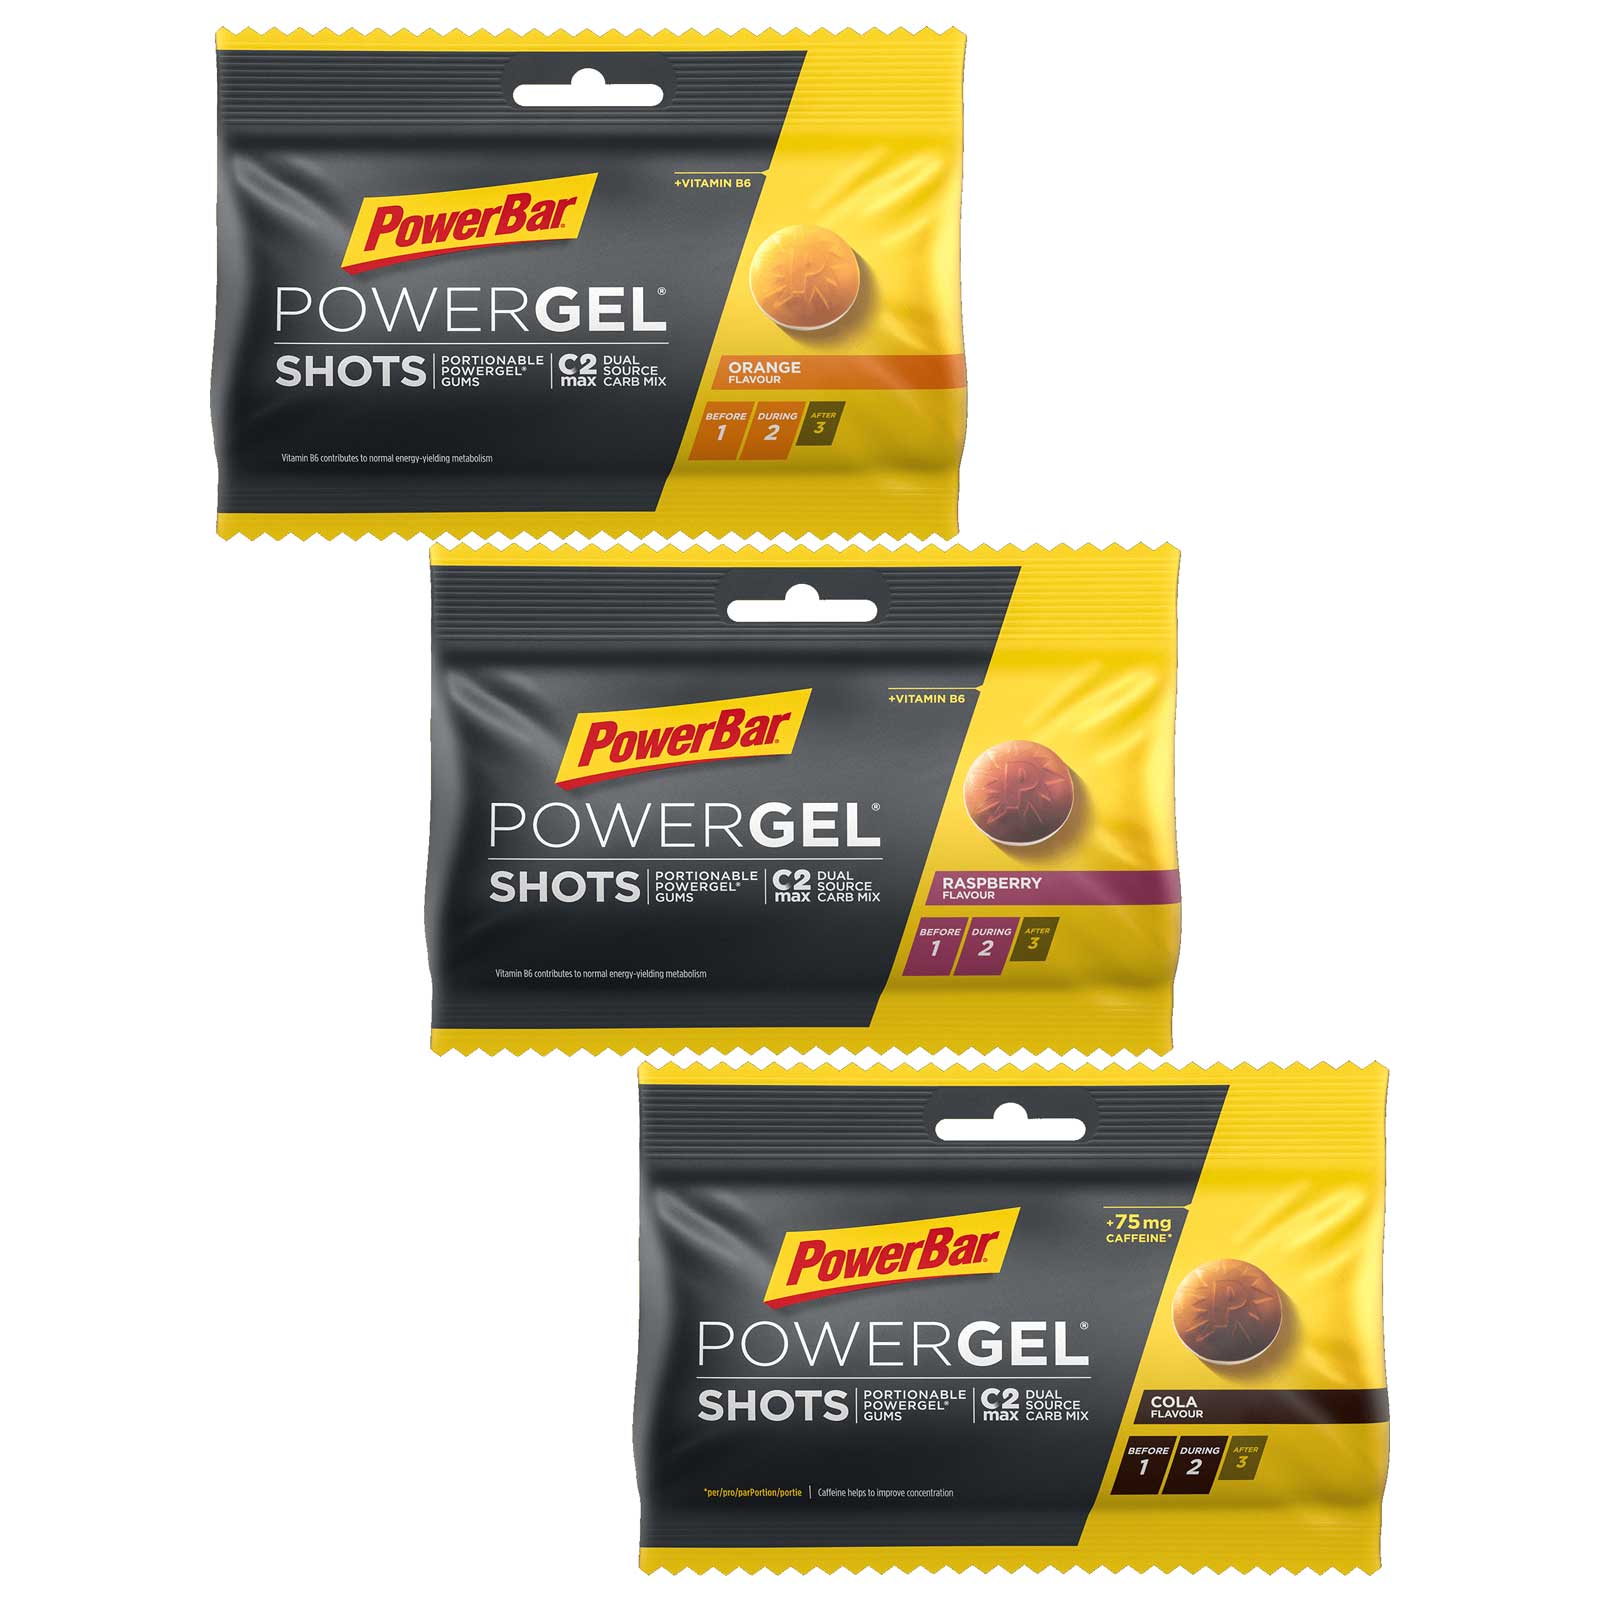 Productfoto van Powerbar PowerGel Shots - Energy Gums - 60g